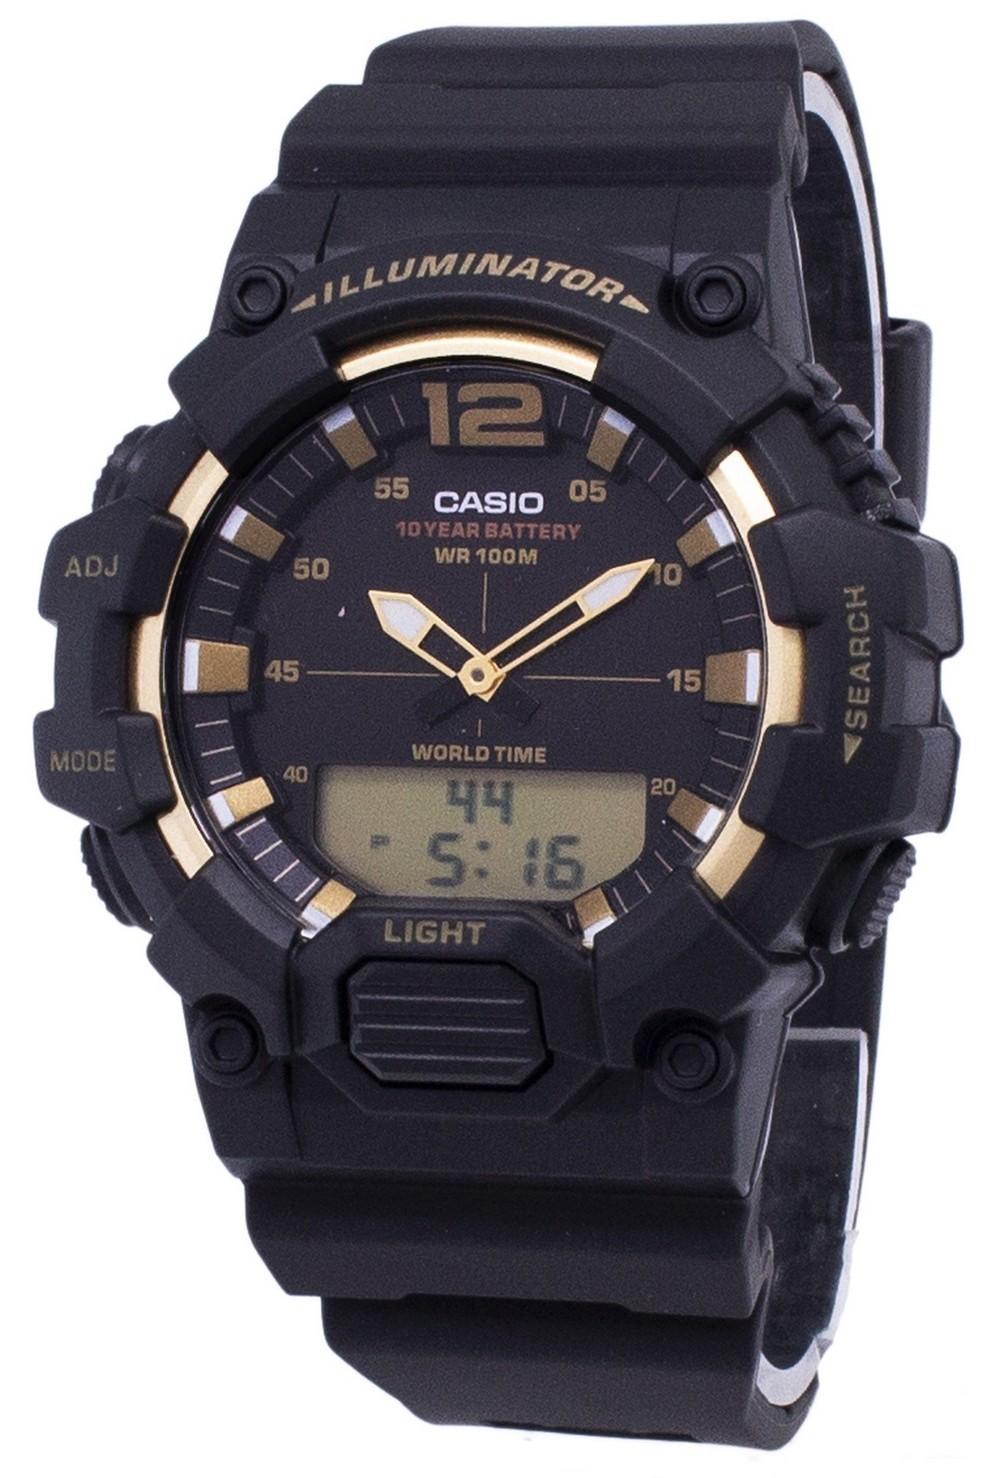 Casio Retro HDC-700-9AV Illuminator Analog Digital Men's Watch